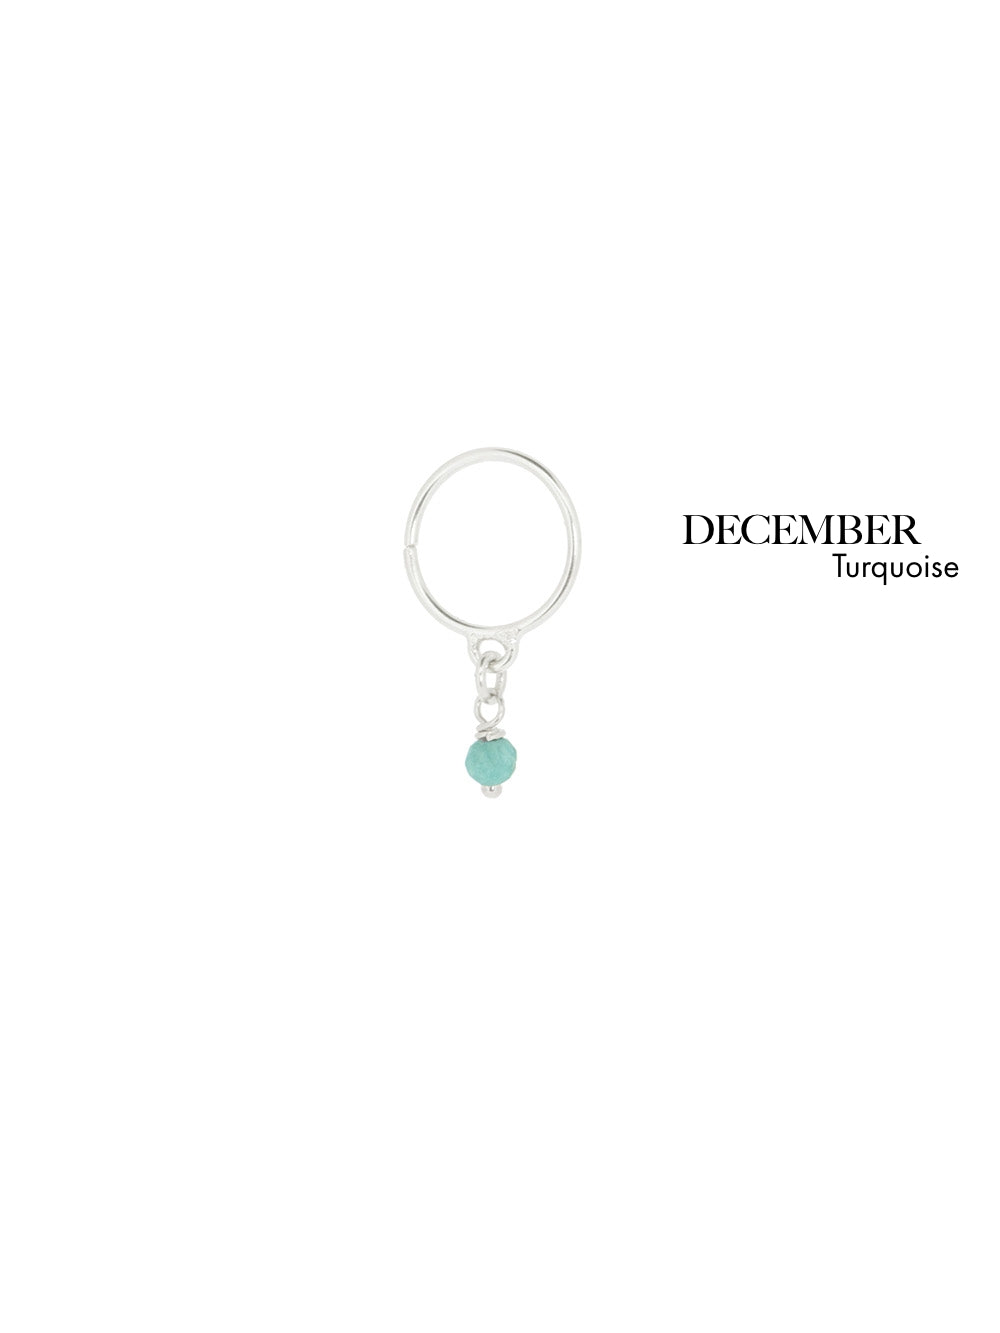 Bestie Birthstone December - Turquoise | 925 Sterling Silver